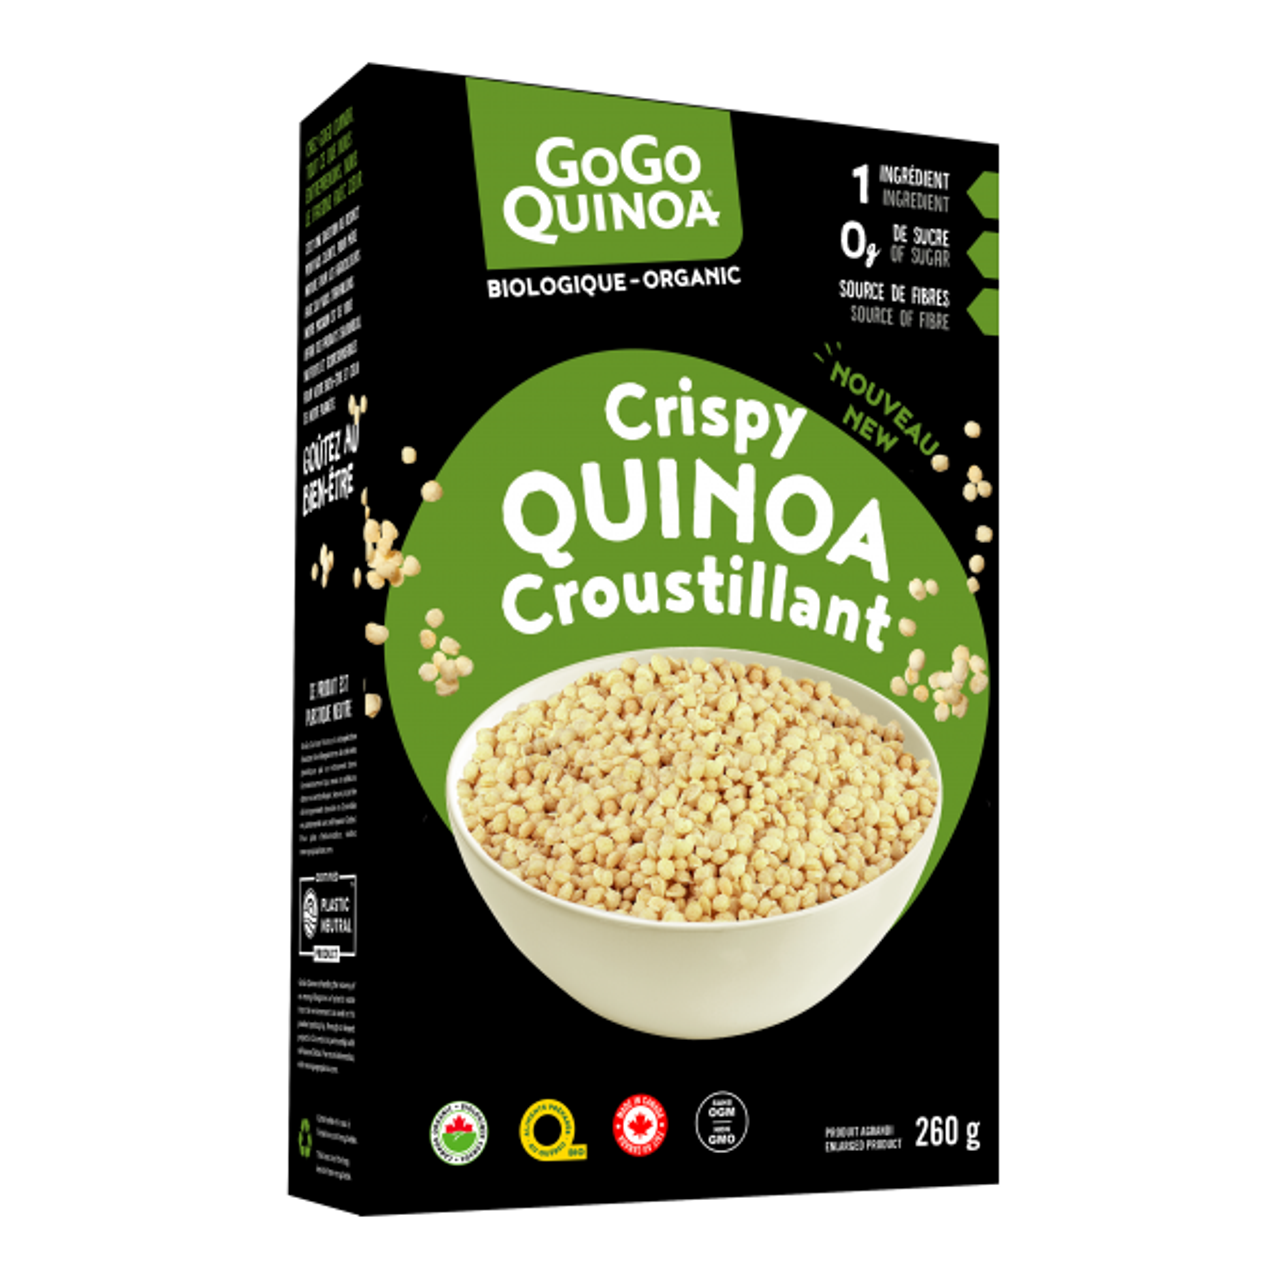 Puffed Quinoa Bio